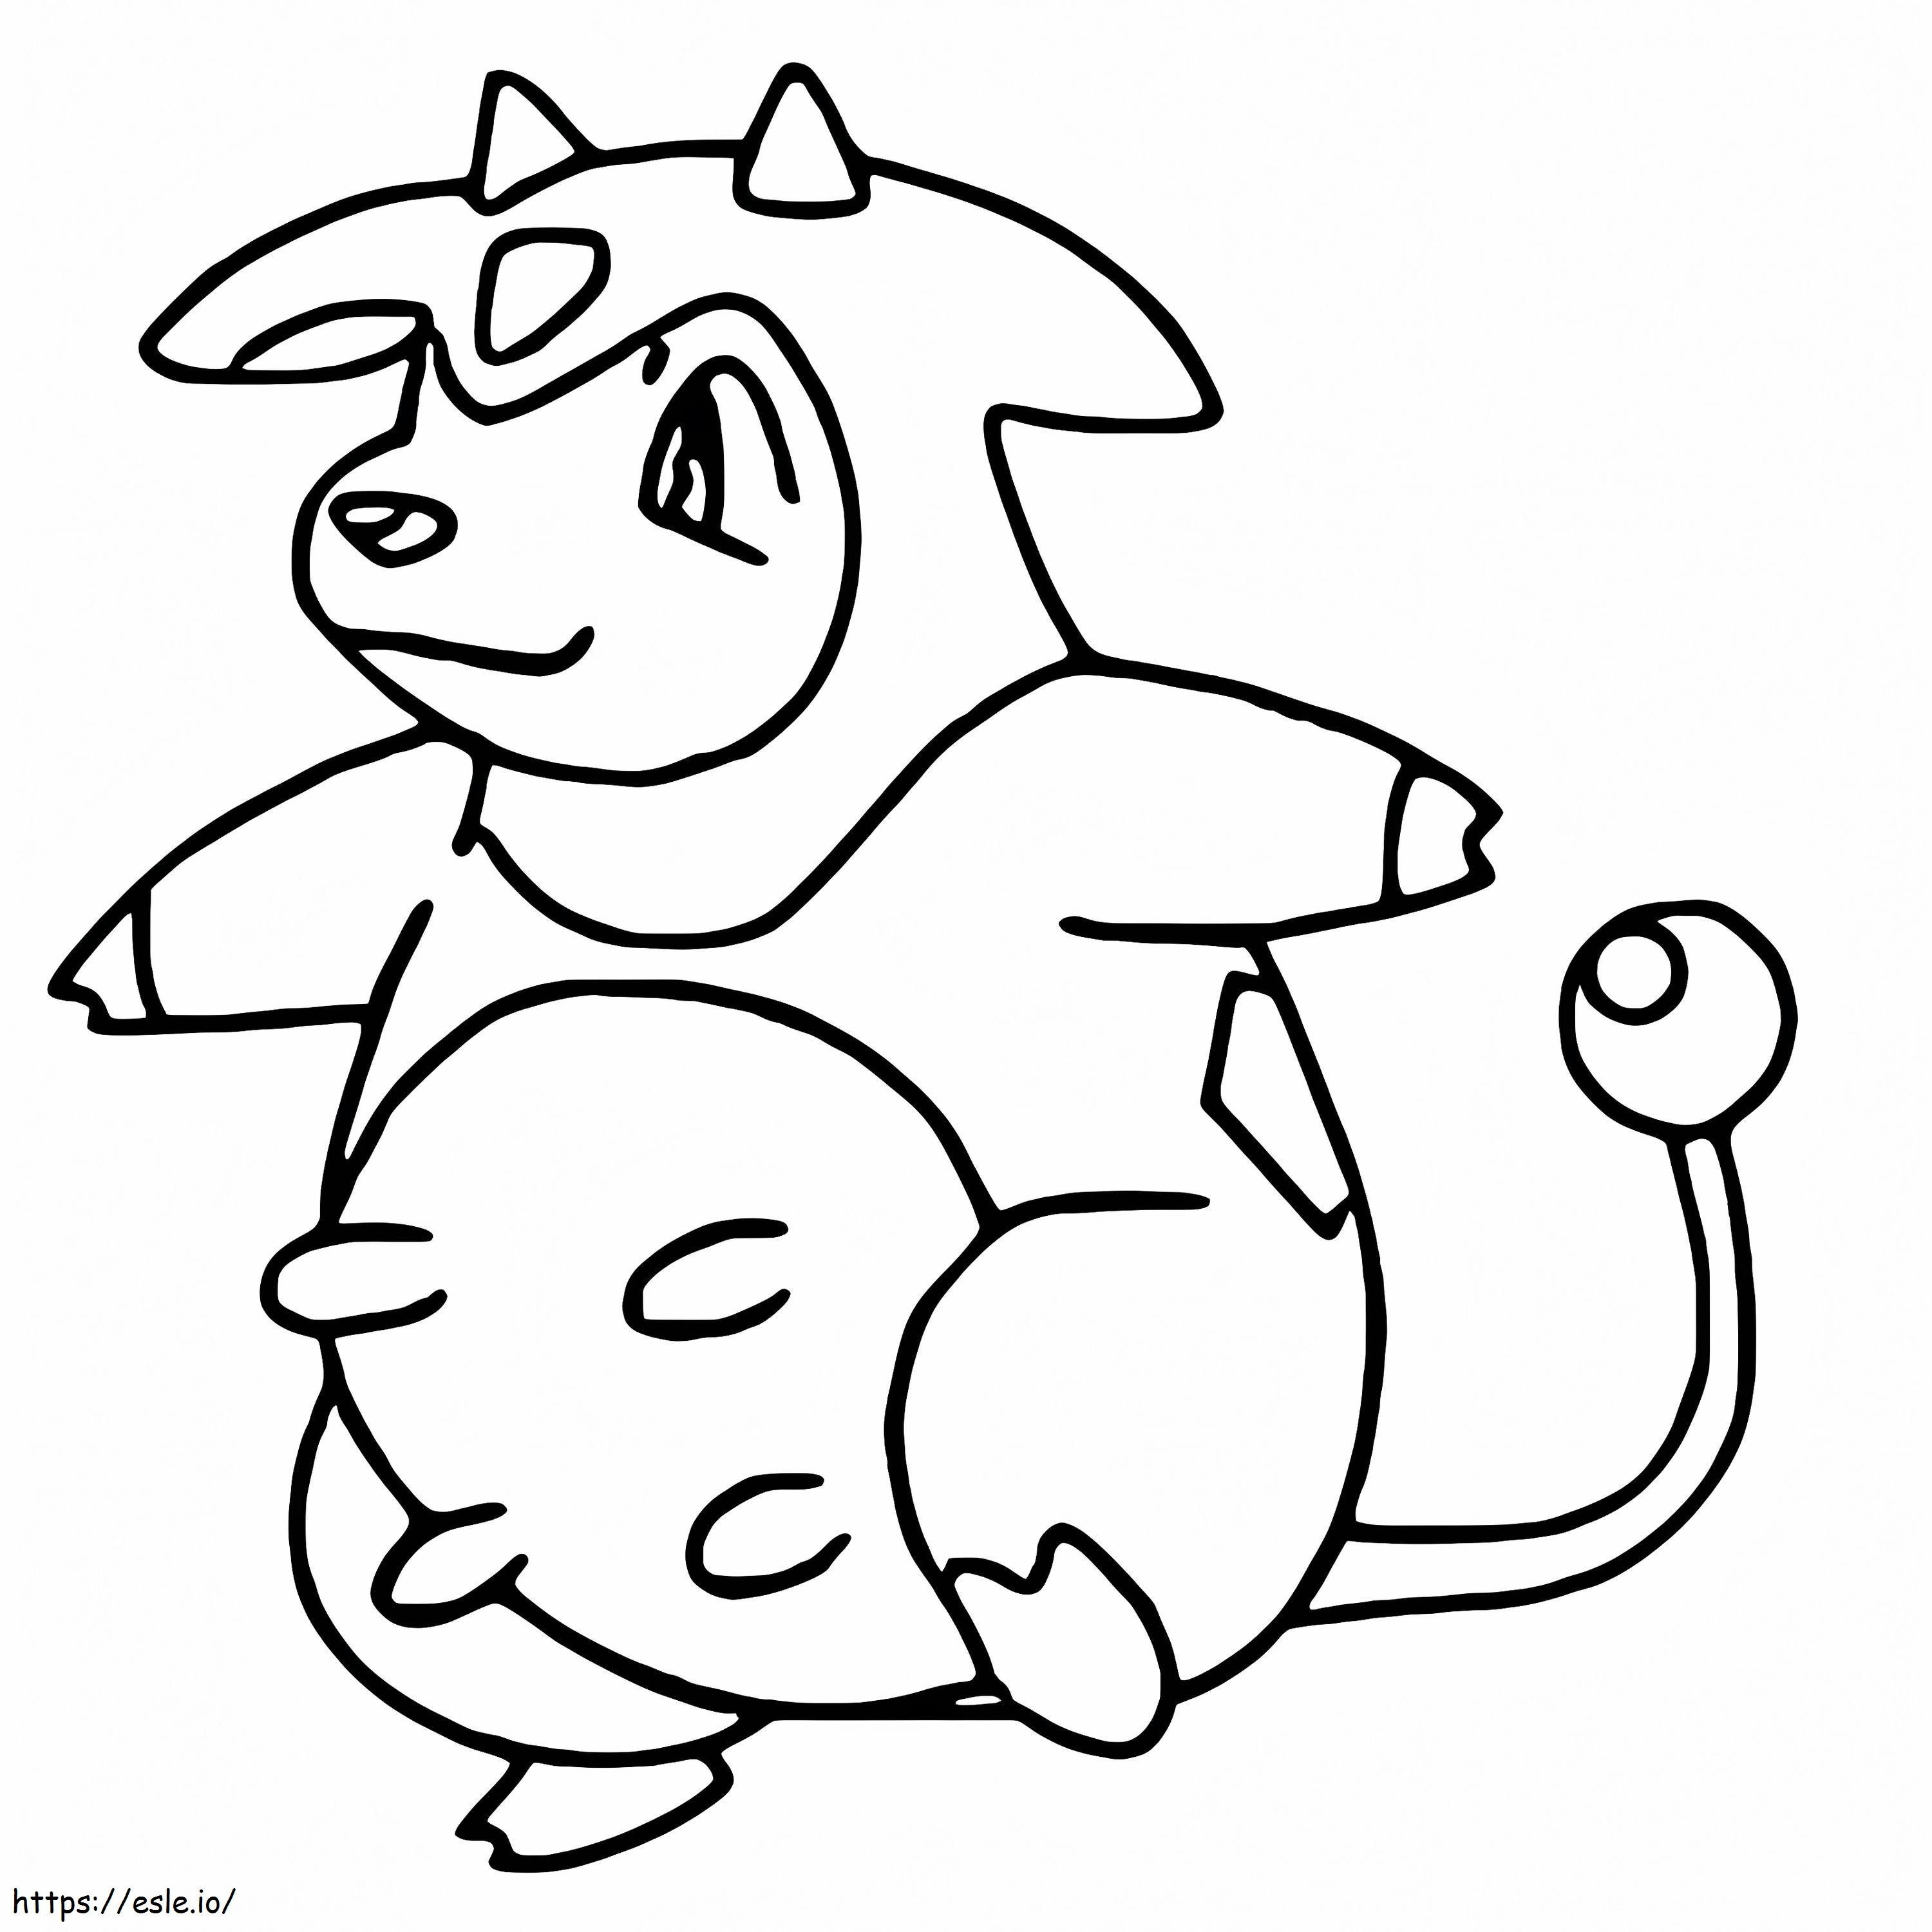 Miltank Pokemon coloring page